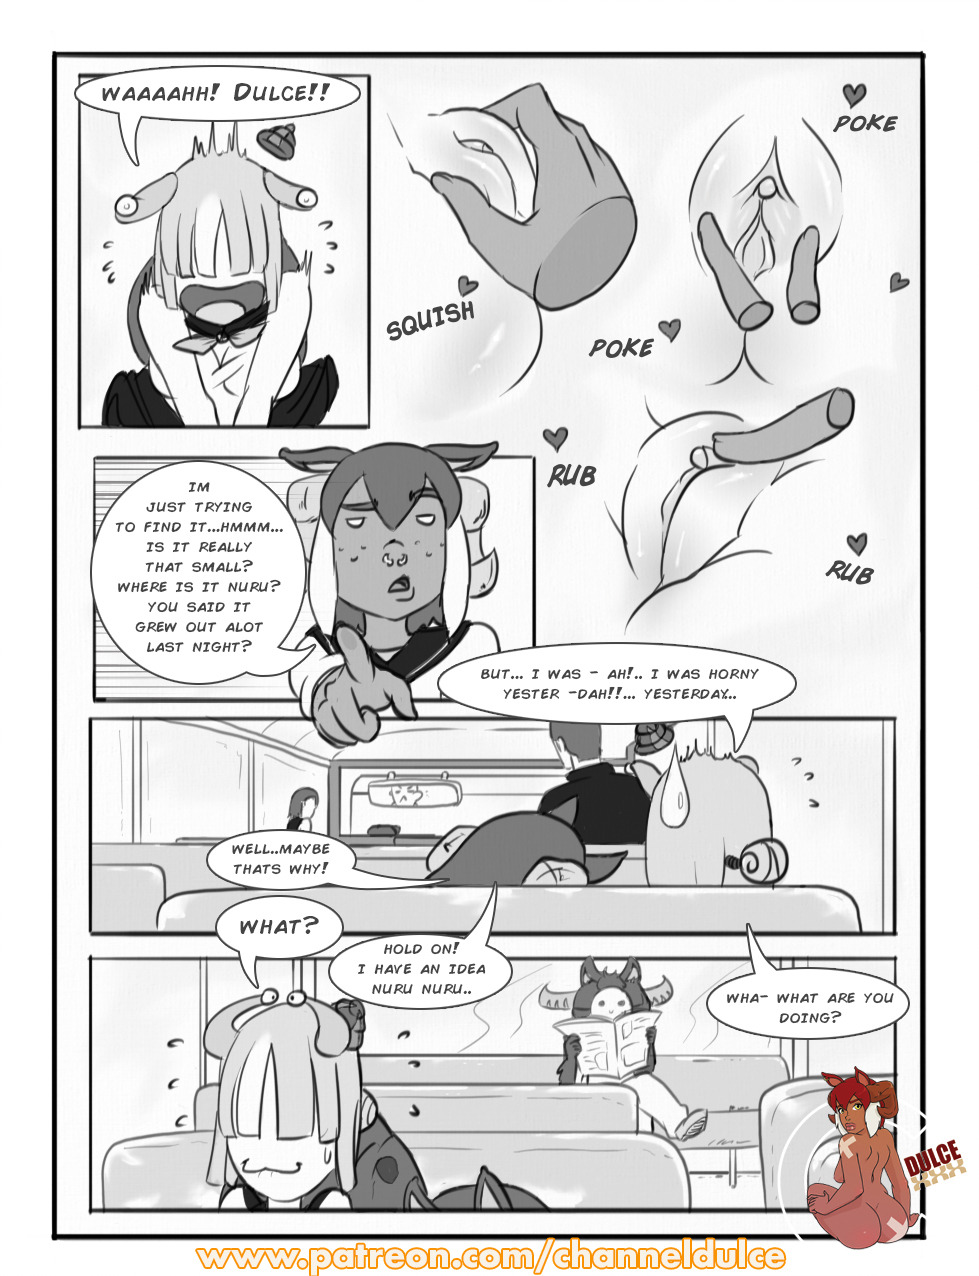 channeldulce: Dulce Comic update Chapter 1 “Bust Ride” pg 1-7 More cumming soon!